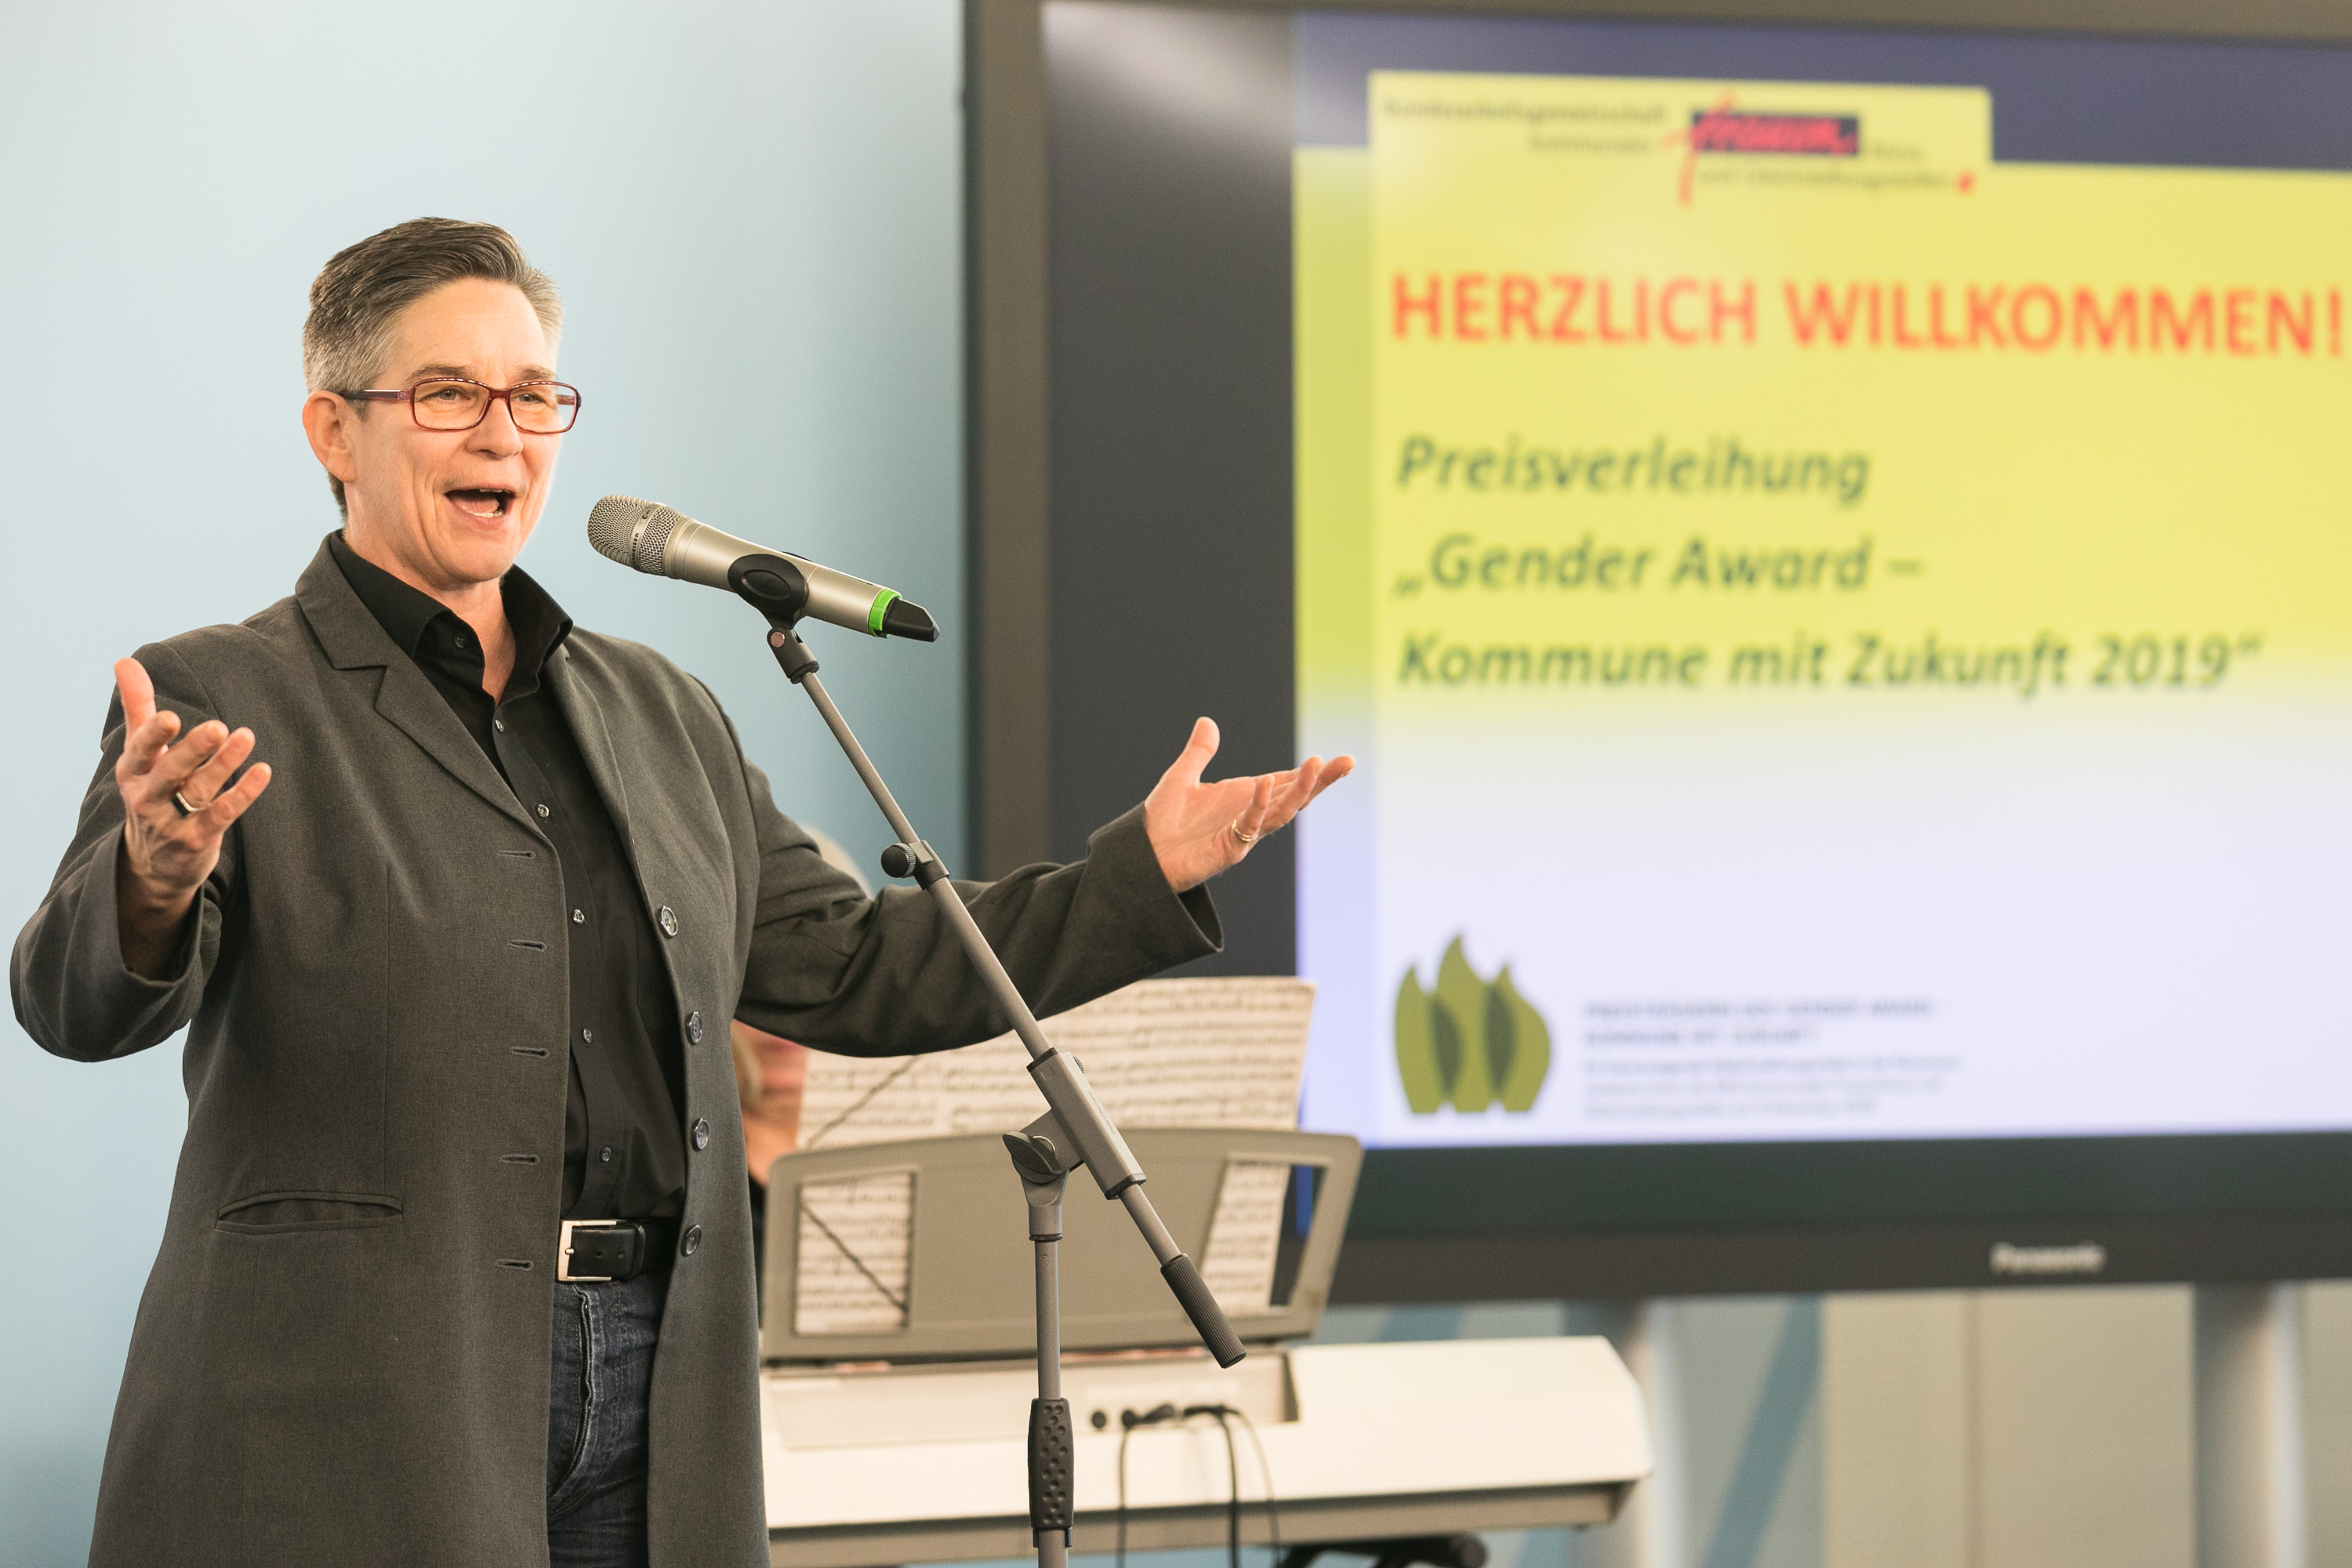 007 Gender Award 2019 Sigrid Grajek Künstlerin